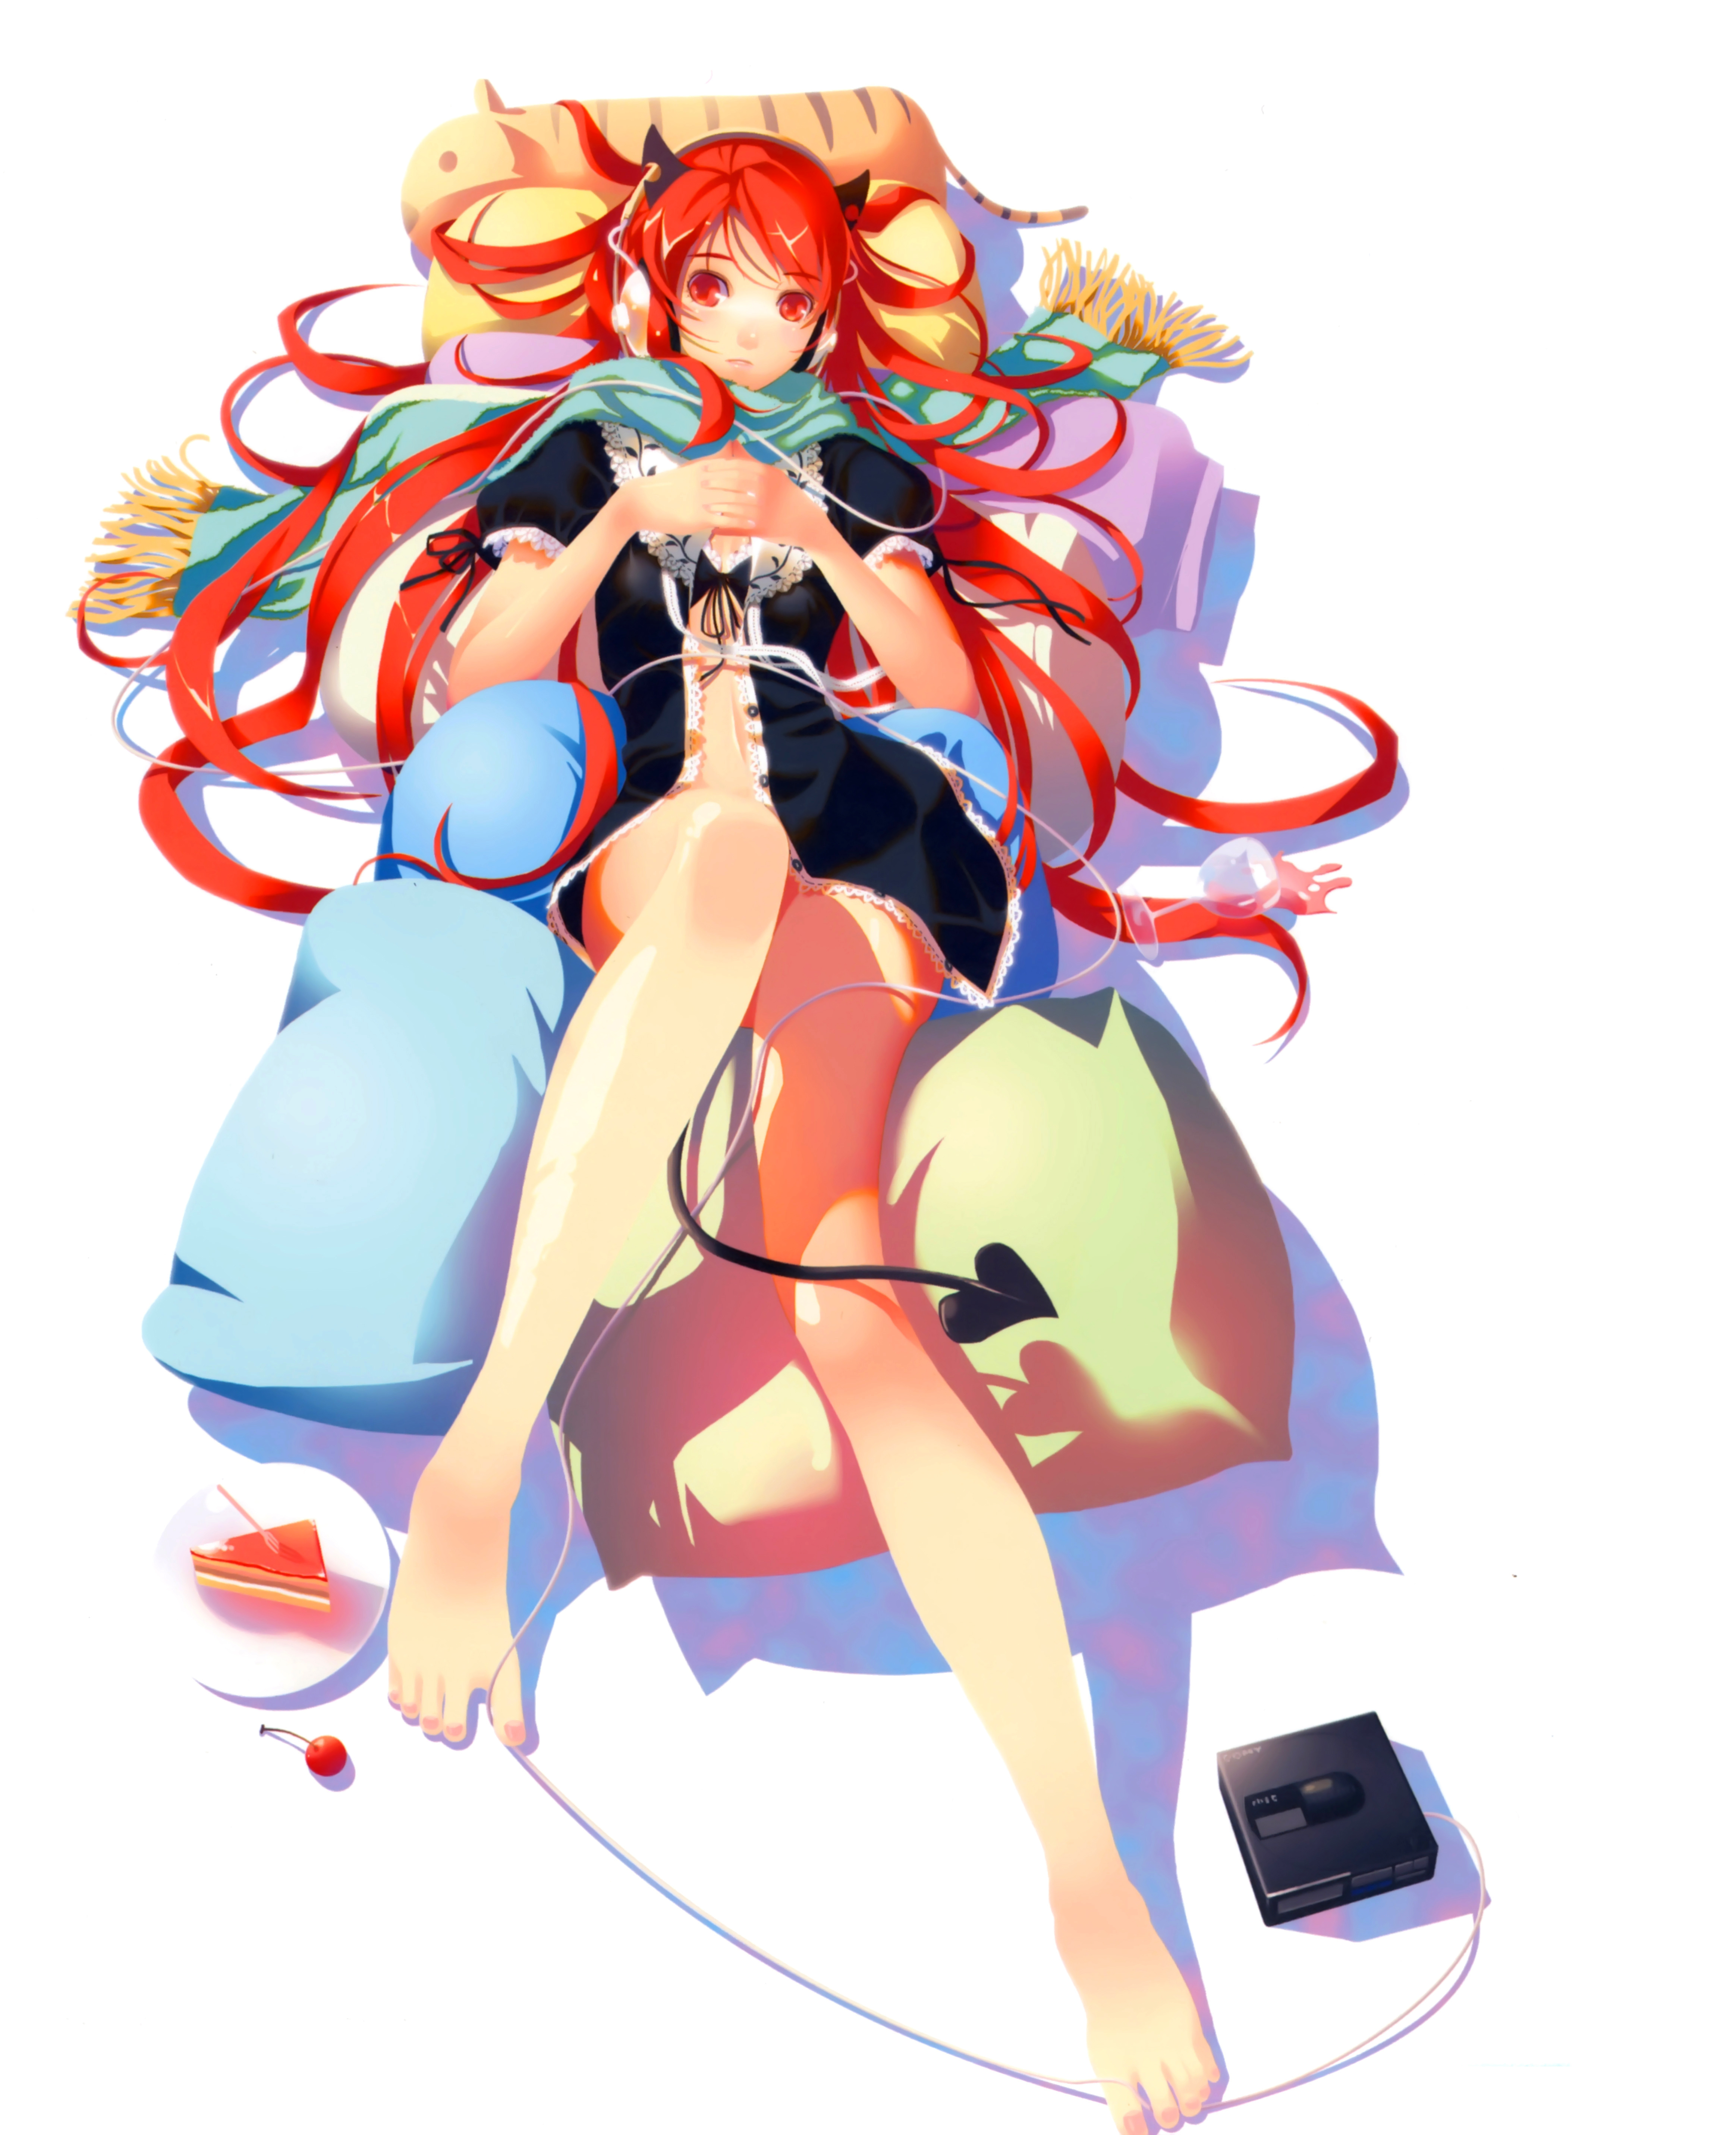 Anime 4656x5726 anime anime girls fan art vofan redhead red eyes horns minidress open clothes underwear legs feet lying on front pillow